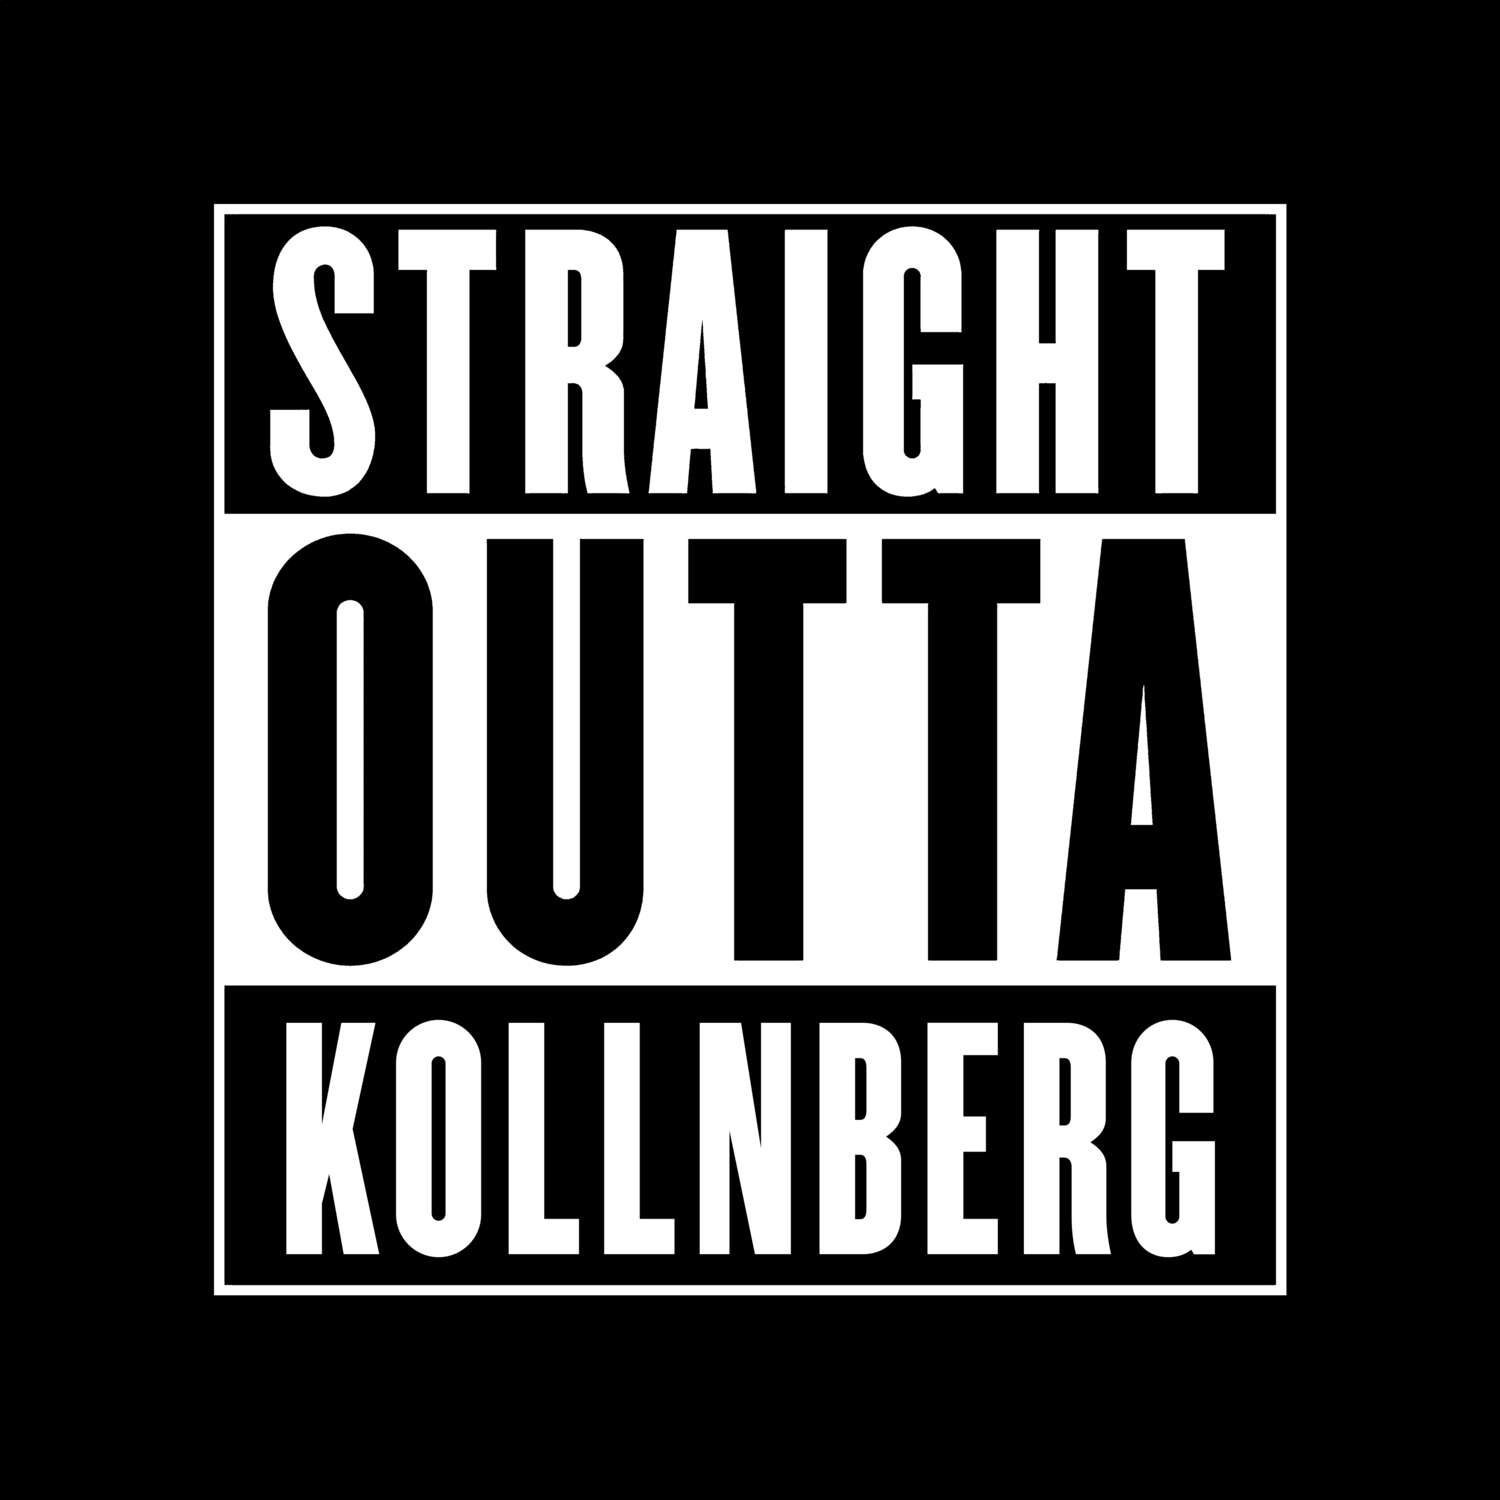 Kollnberg T-Shirt »Straight Outta«